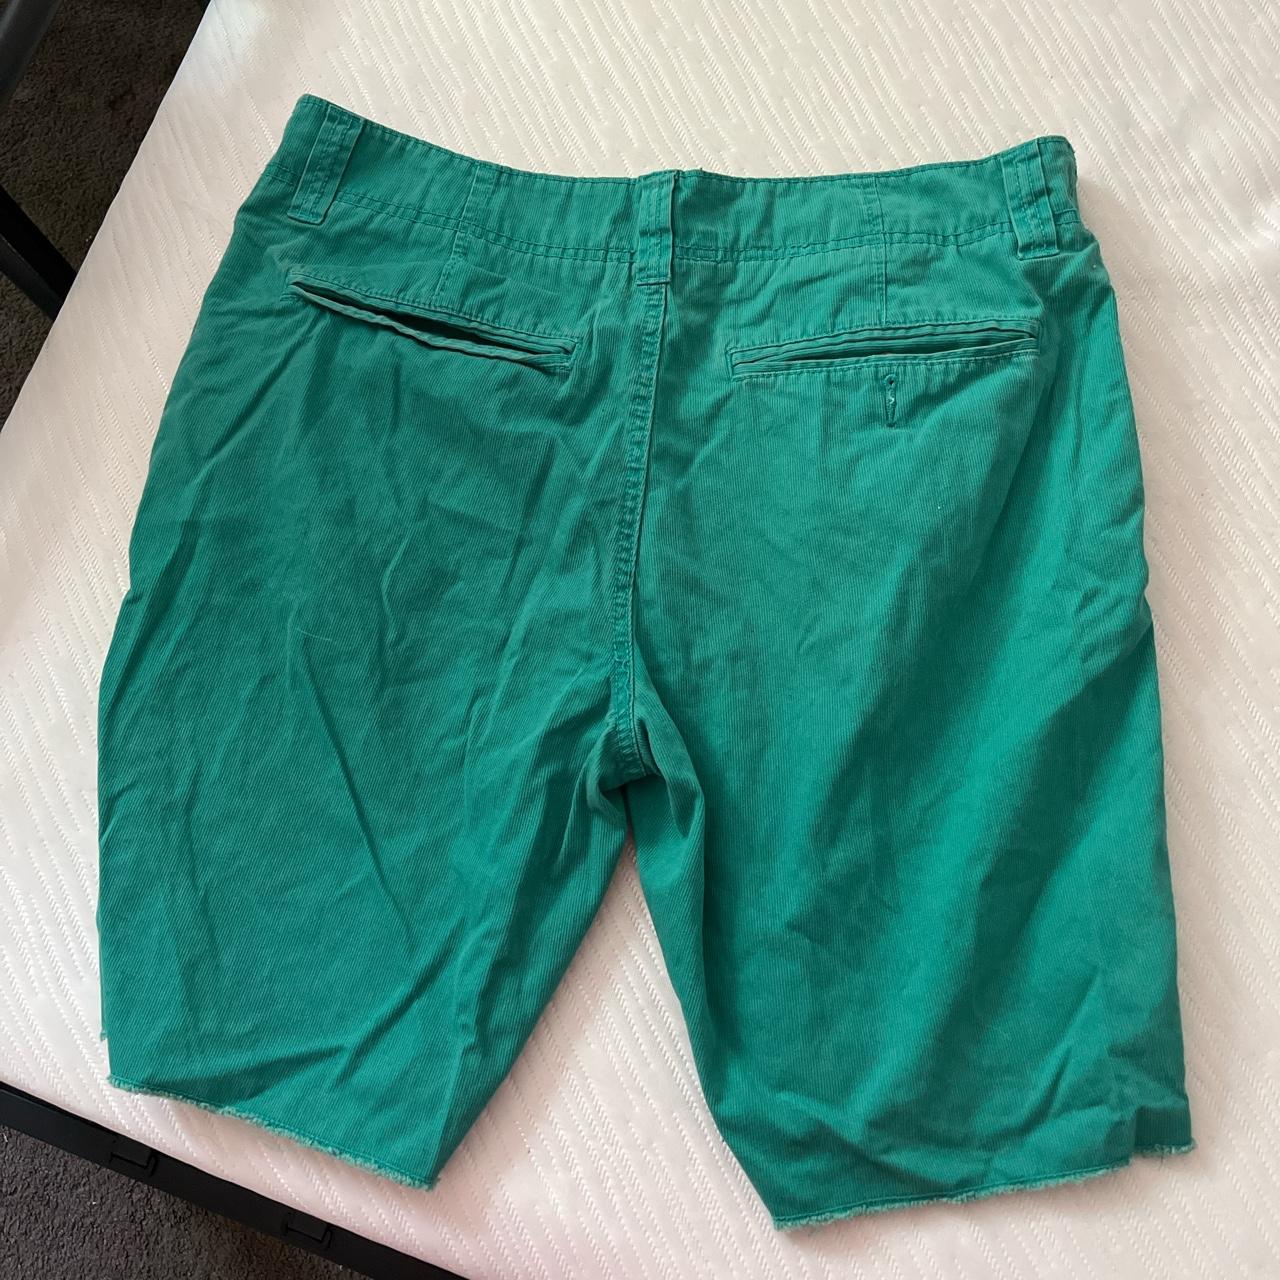 Mossimo Men's Green Shorts | Depop